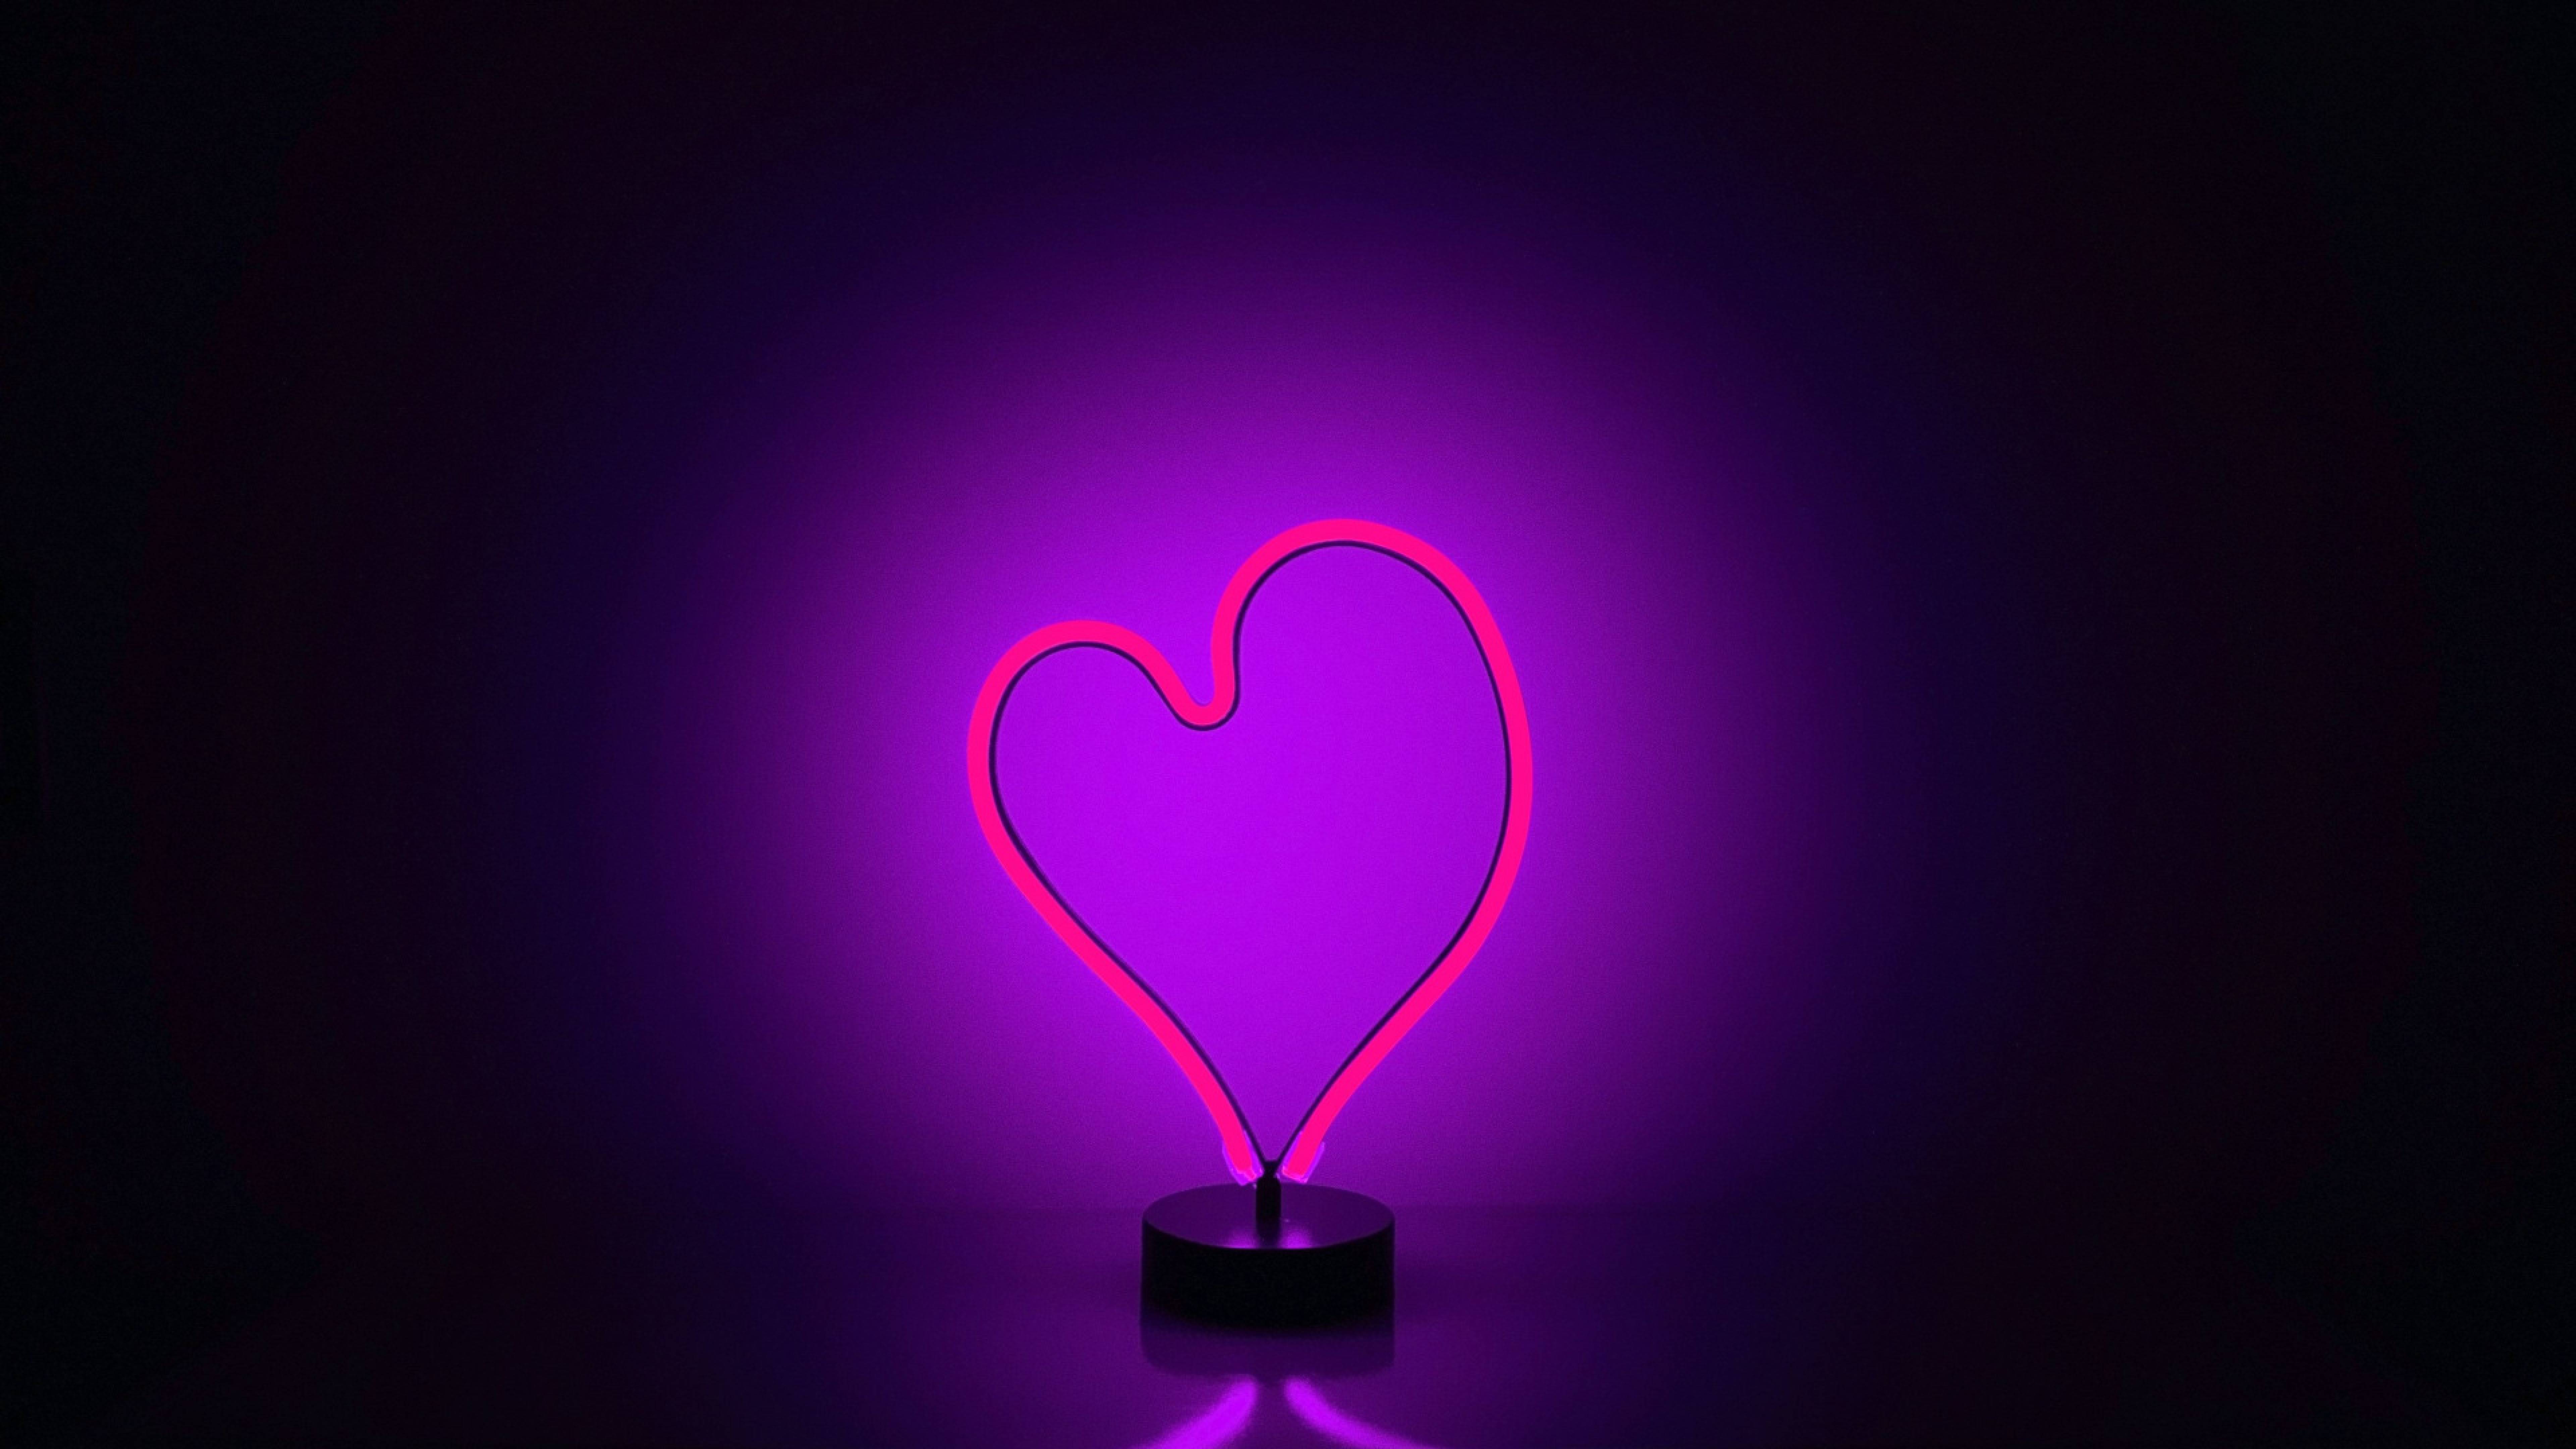 Neon Light Heart 8K Wallpaper, HD Minimalist 4K Wallpaper, Image, Photo and Background